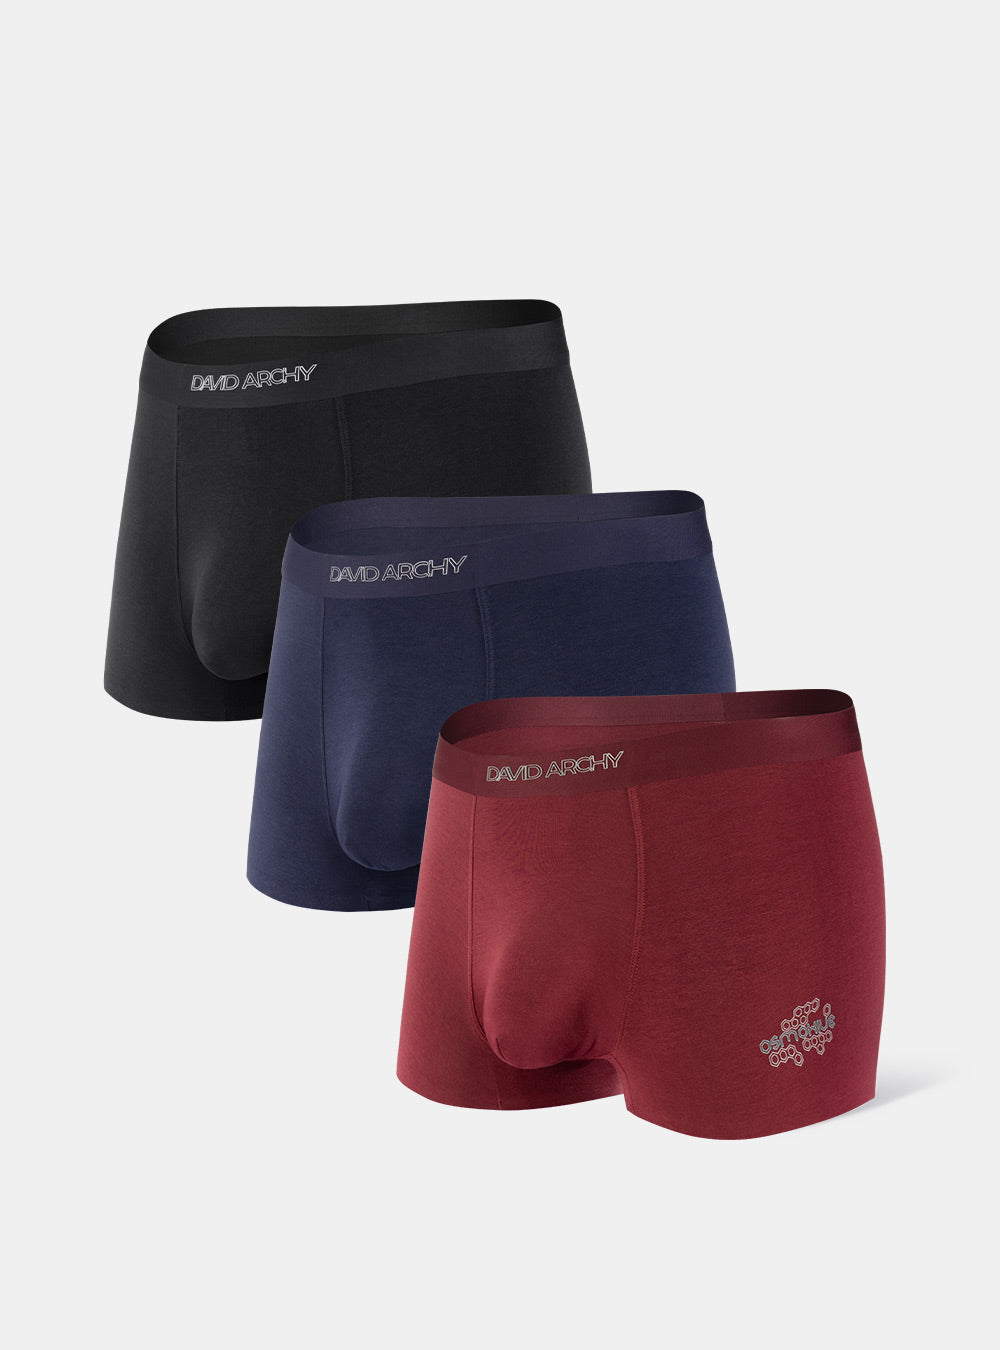 Buy DAVID ARCHY Men's Underwear Premium Cotton Boxer Briefs Dual